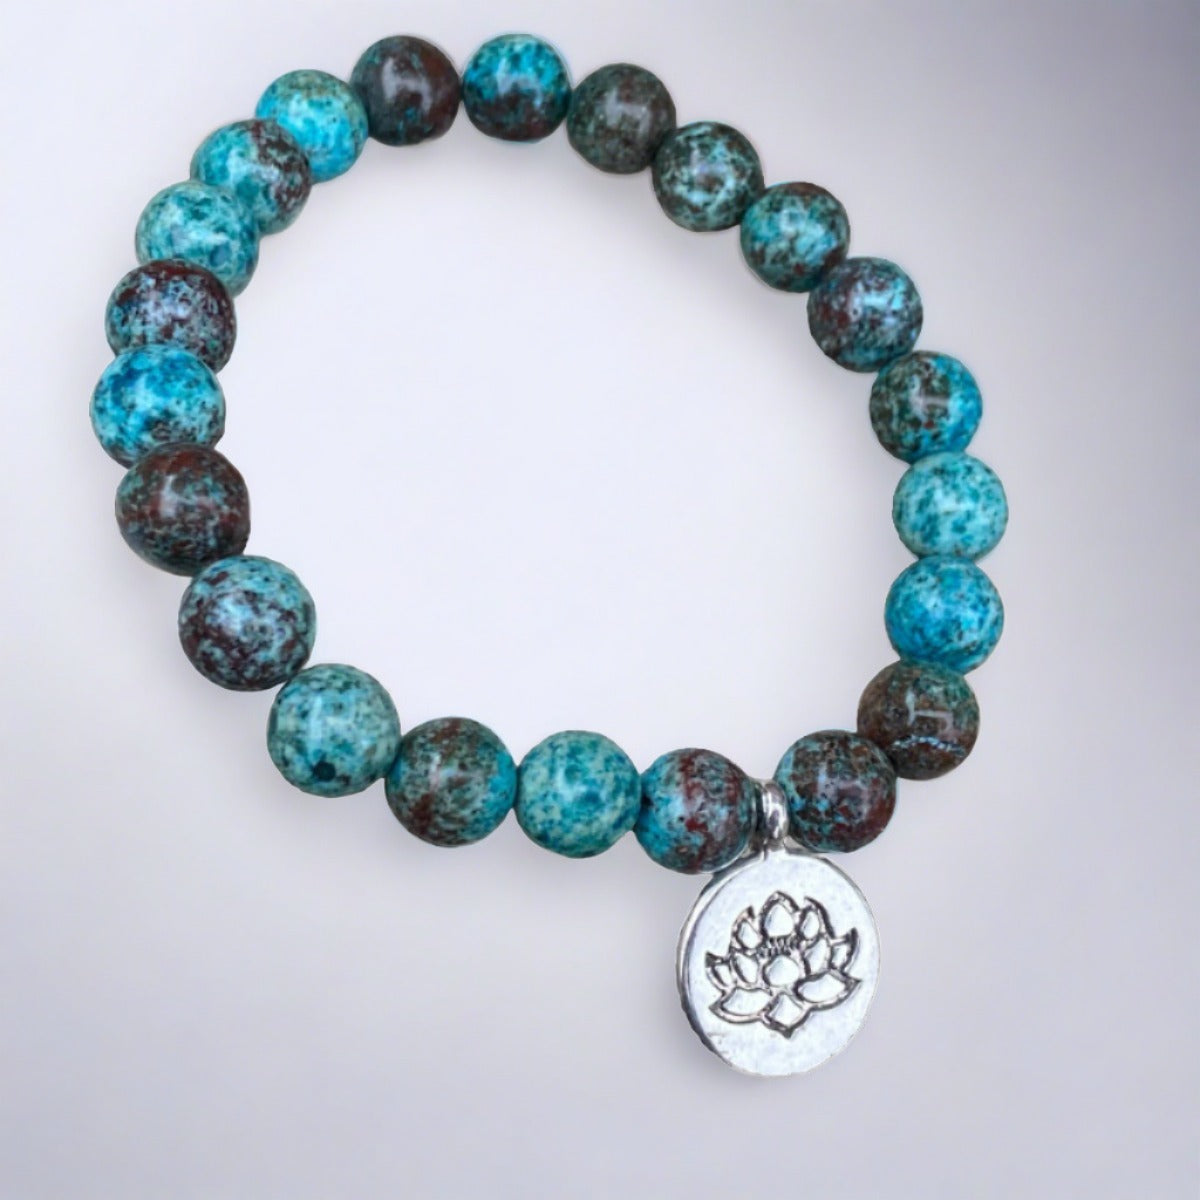 Blue chrysocolla bracelet with lotus charm on rock background